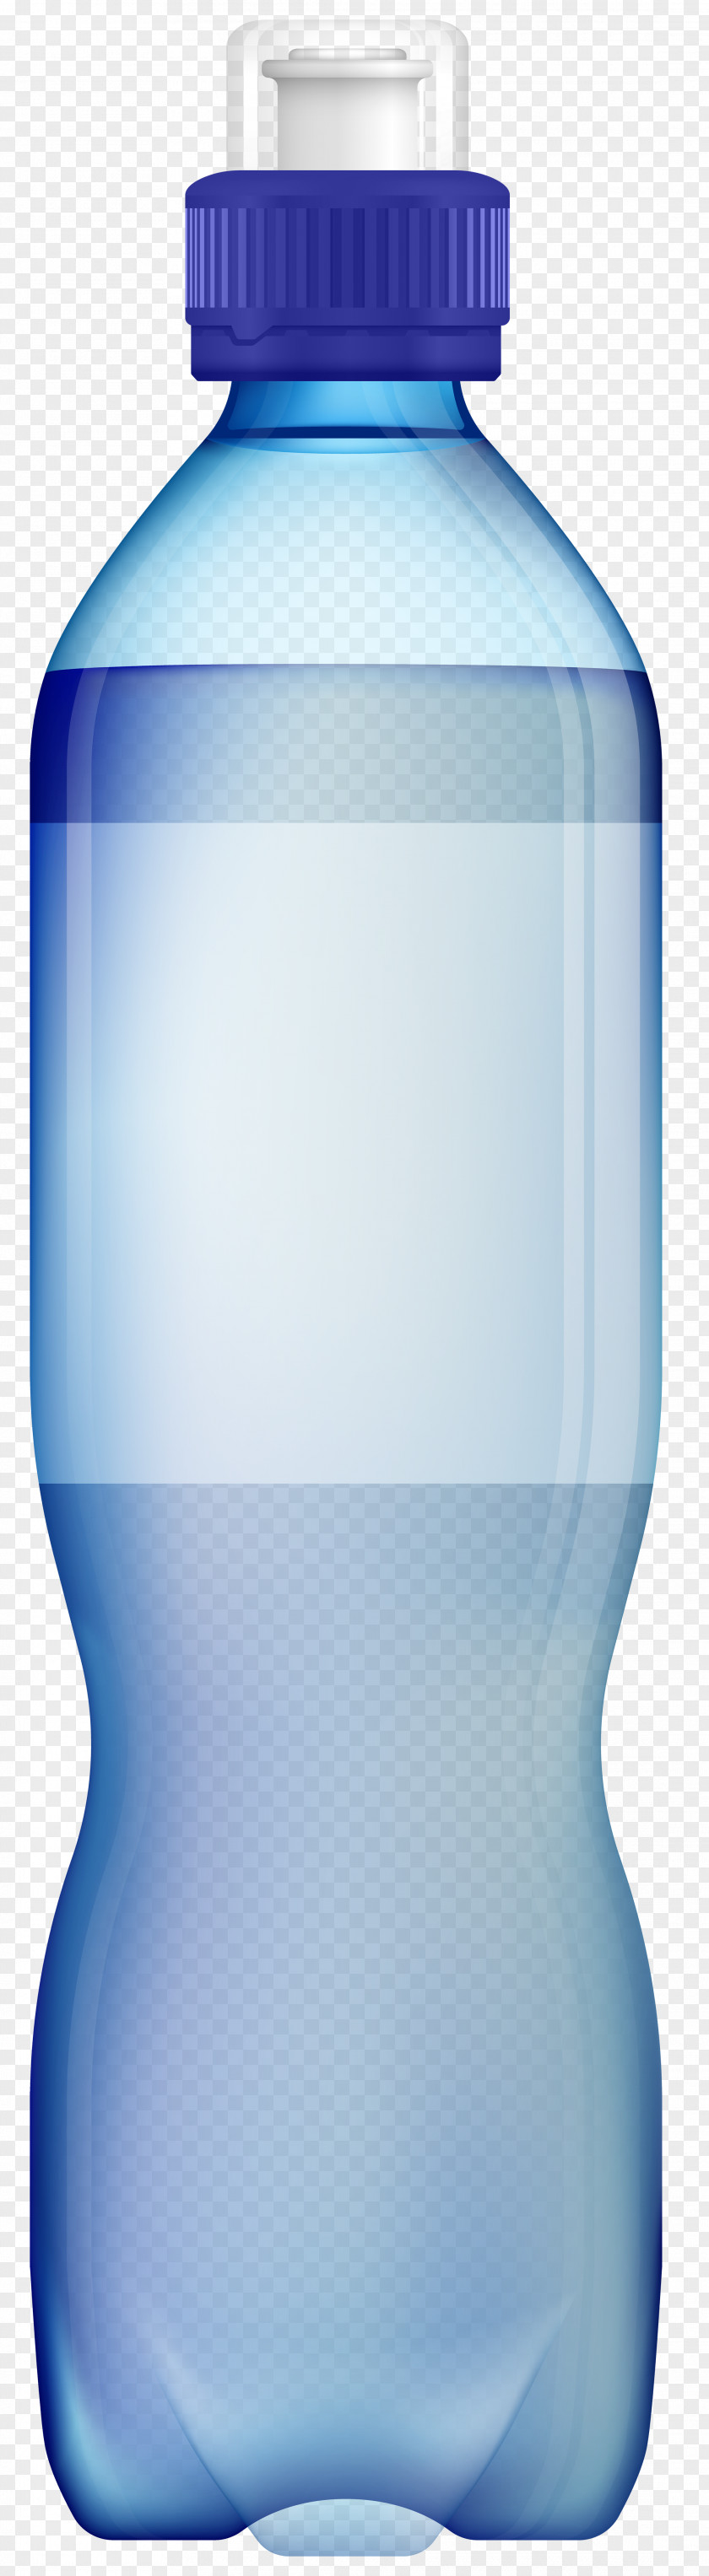 Bottle Water Bottles Bottled Plastic Clip Art PNG